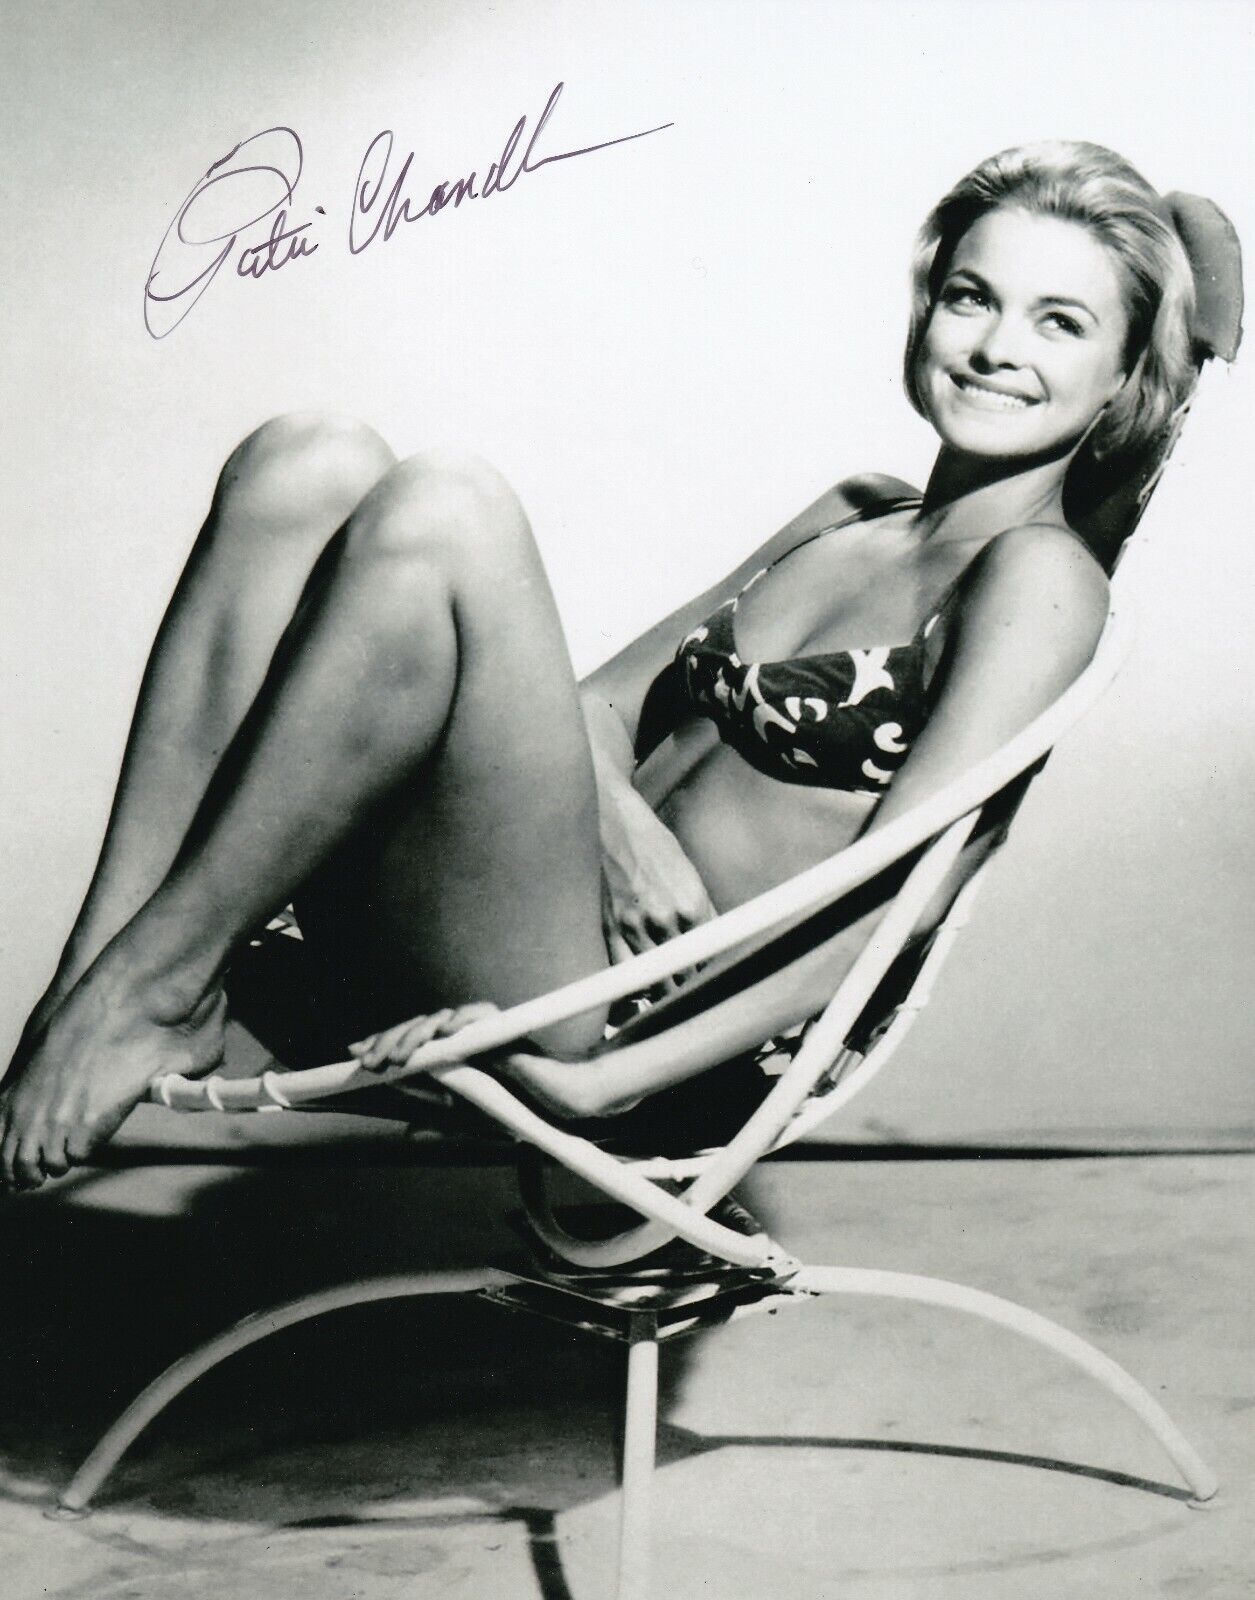 Patti Chandler REAL hand SIGNED Photo Poster painting #1 COA Autographed Beach Bikini